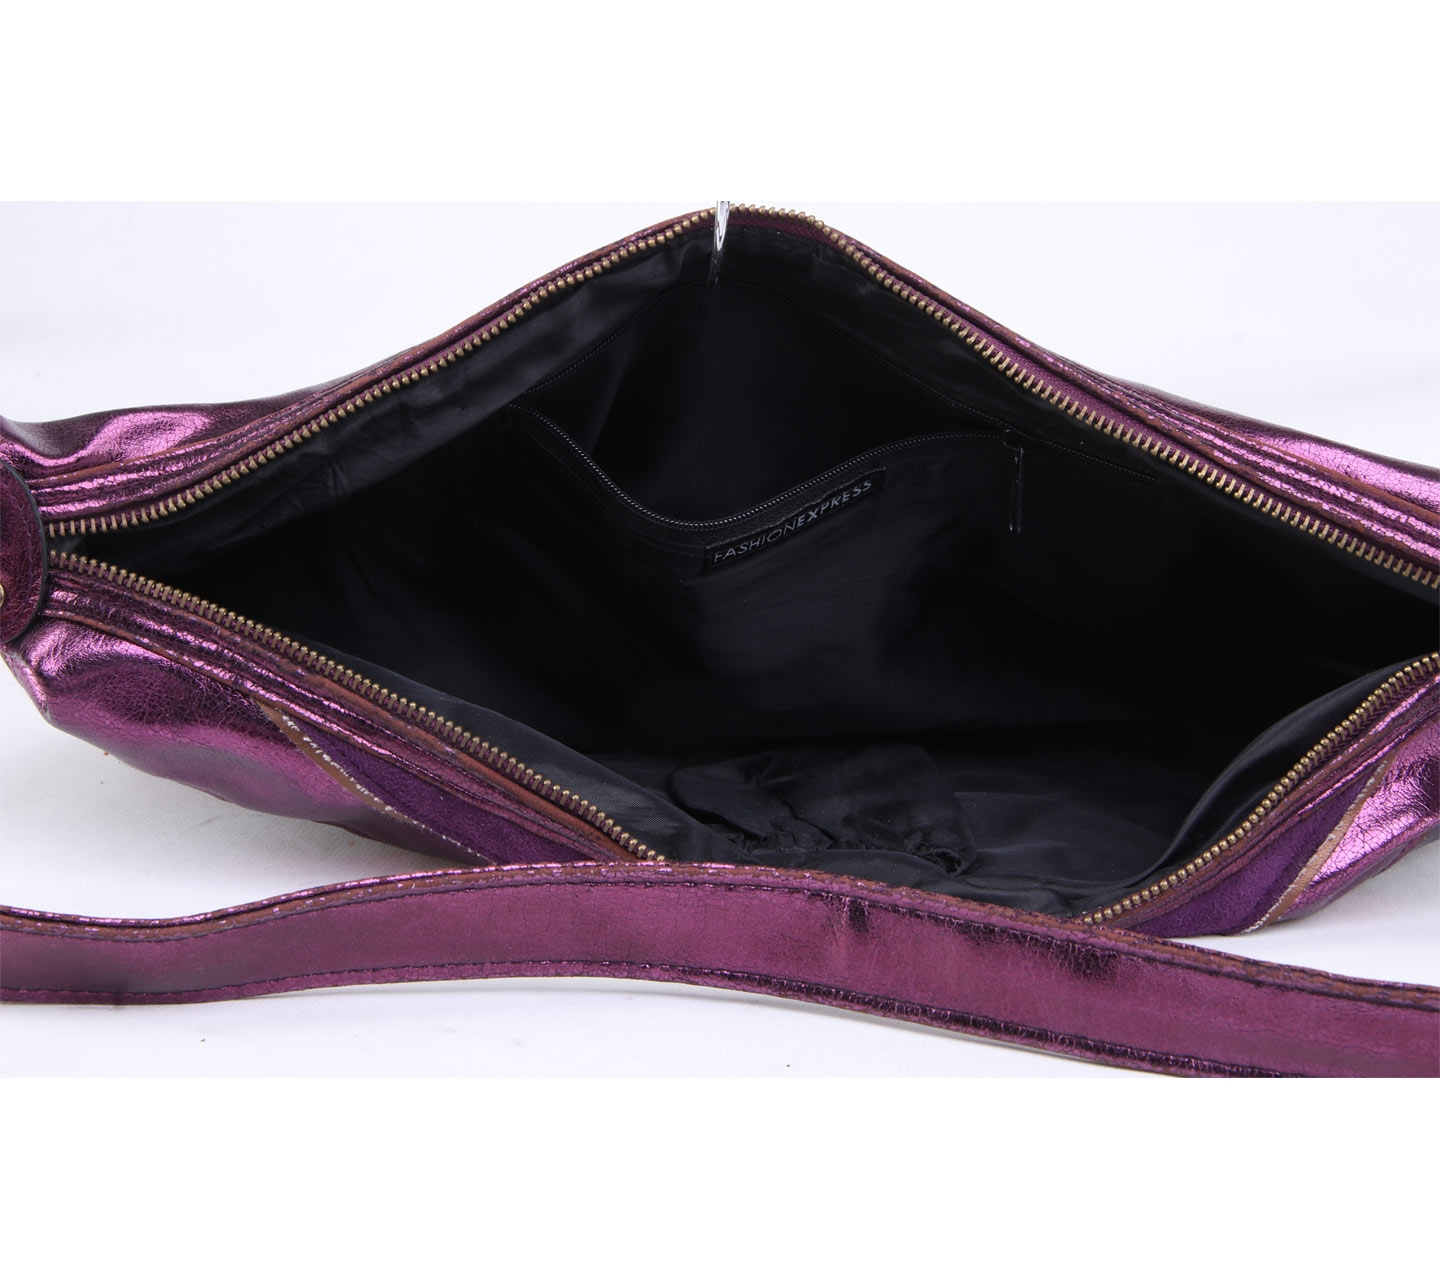 Fashion Express Purple Handbag